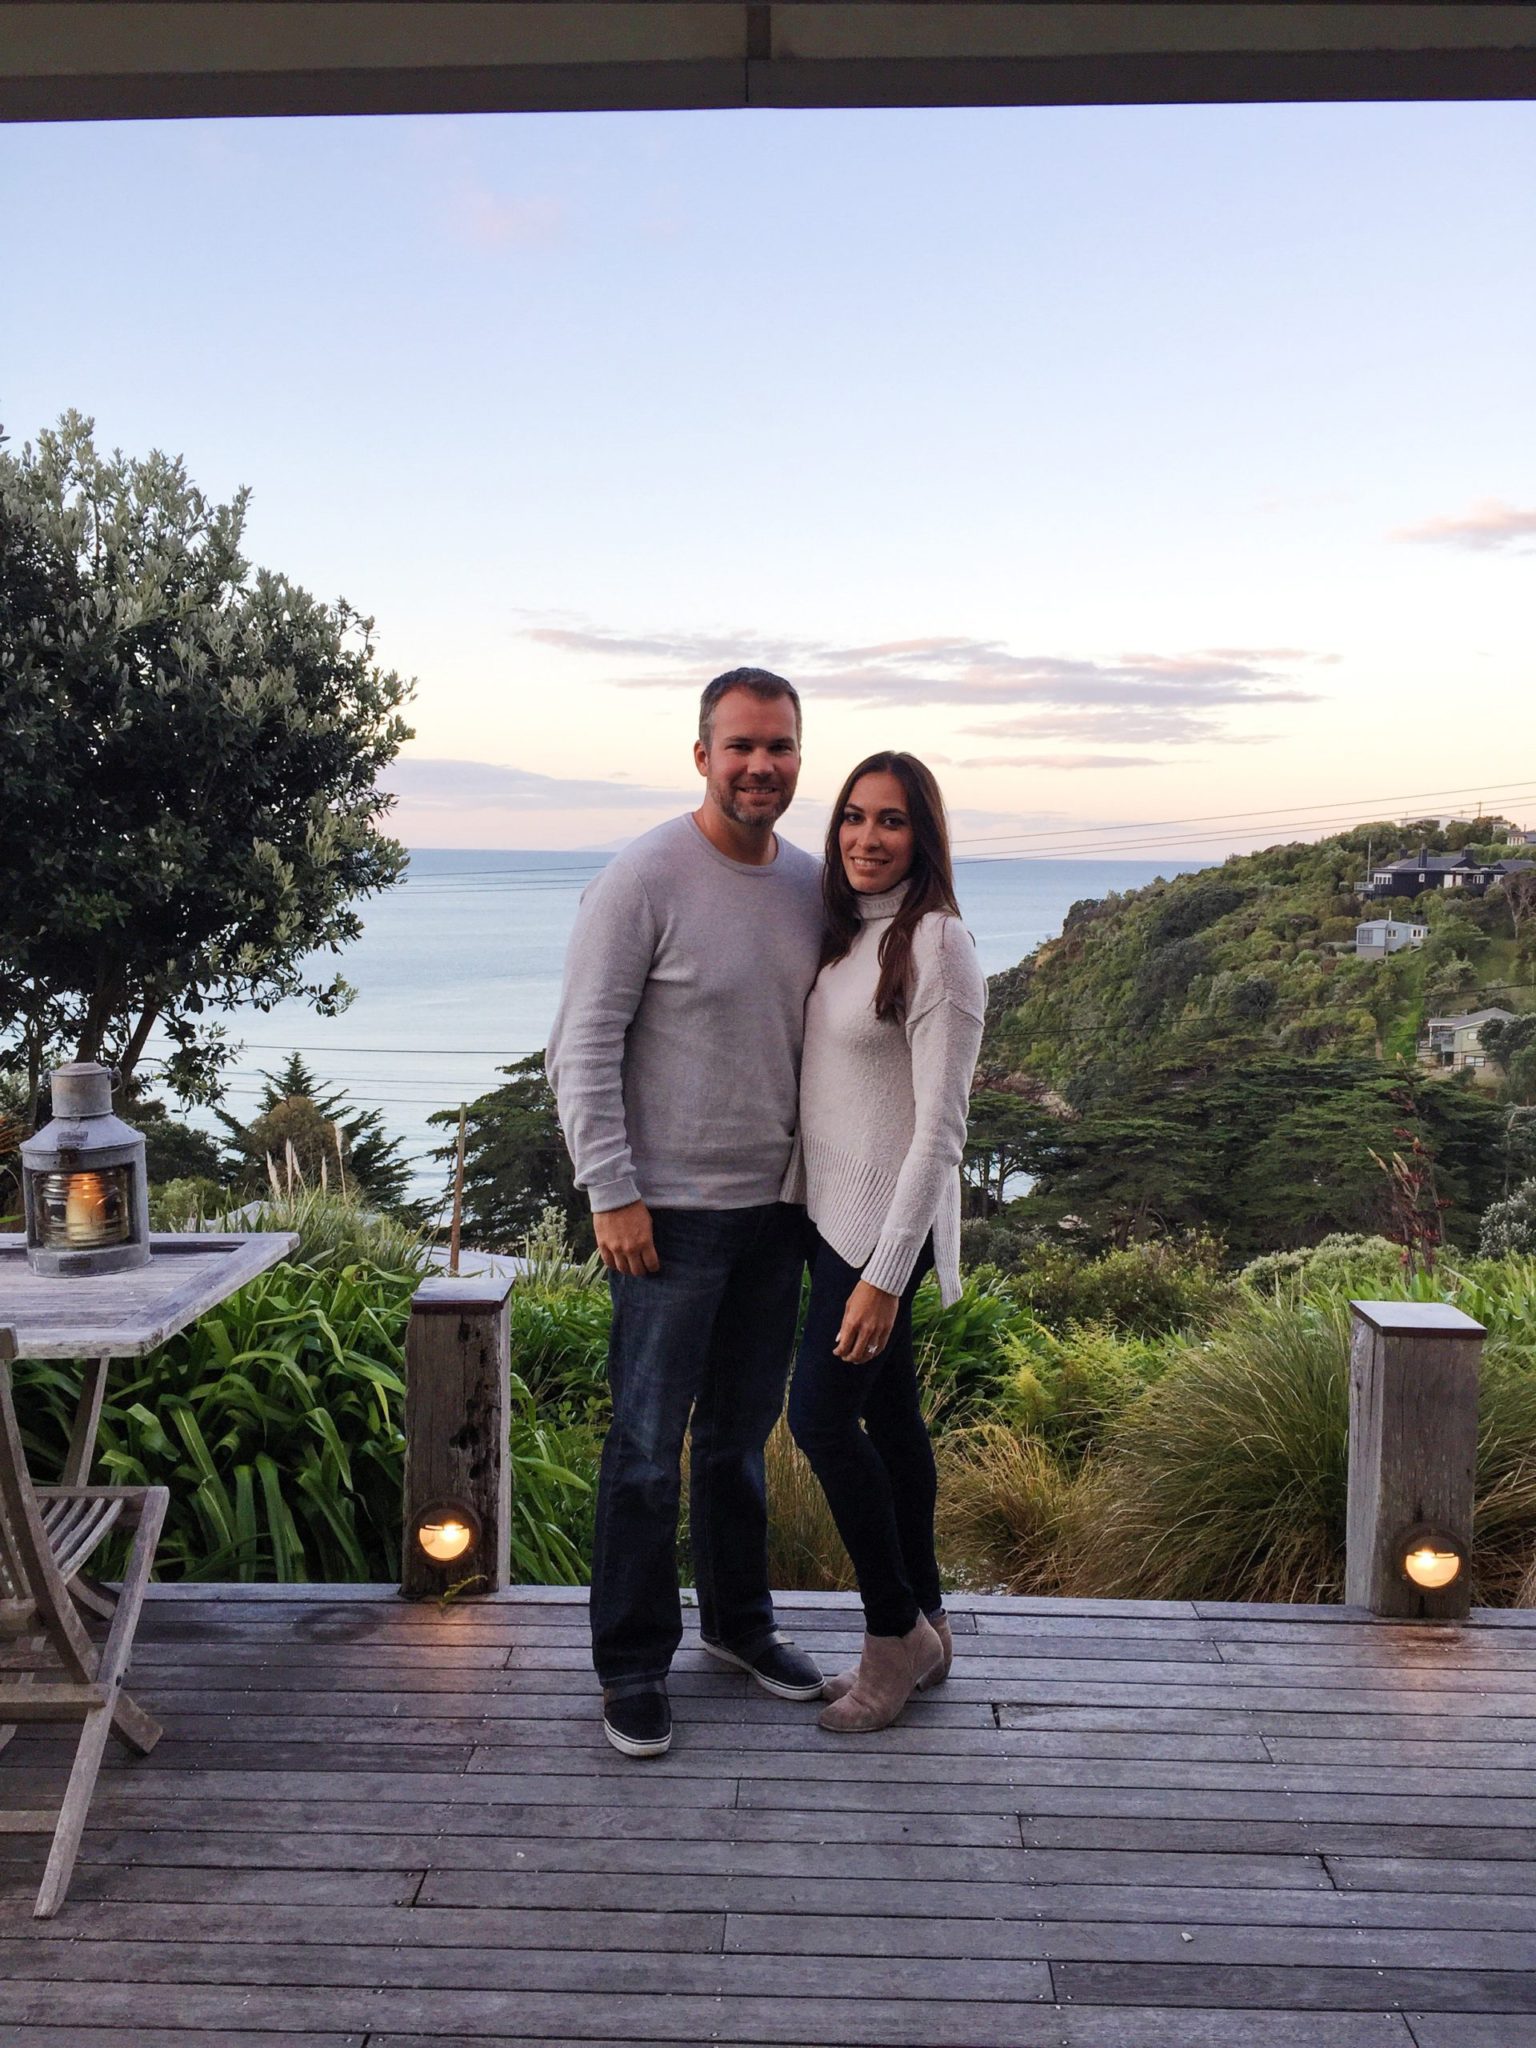 A Glam Lifestyle blogger Amanda on her honeymoon with her husband in Waiheke Island at the Boatshed luxury hotel